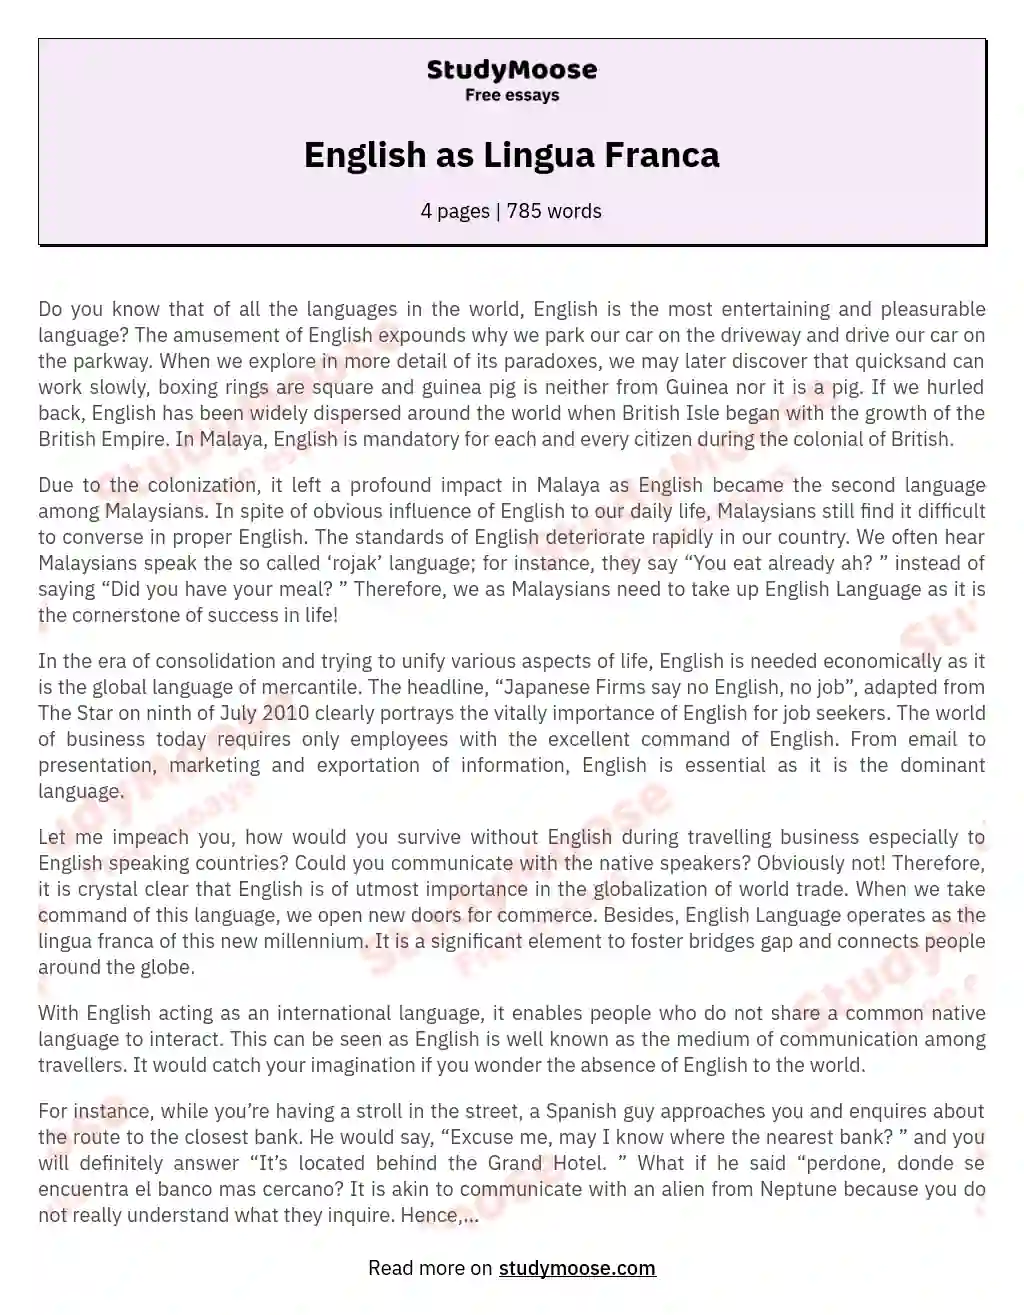 English as Lingua Franca essay